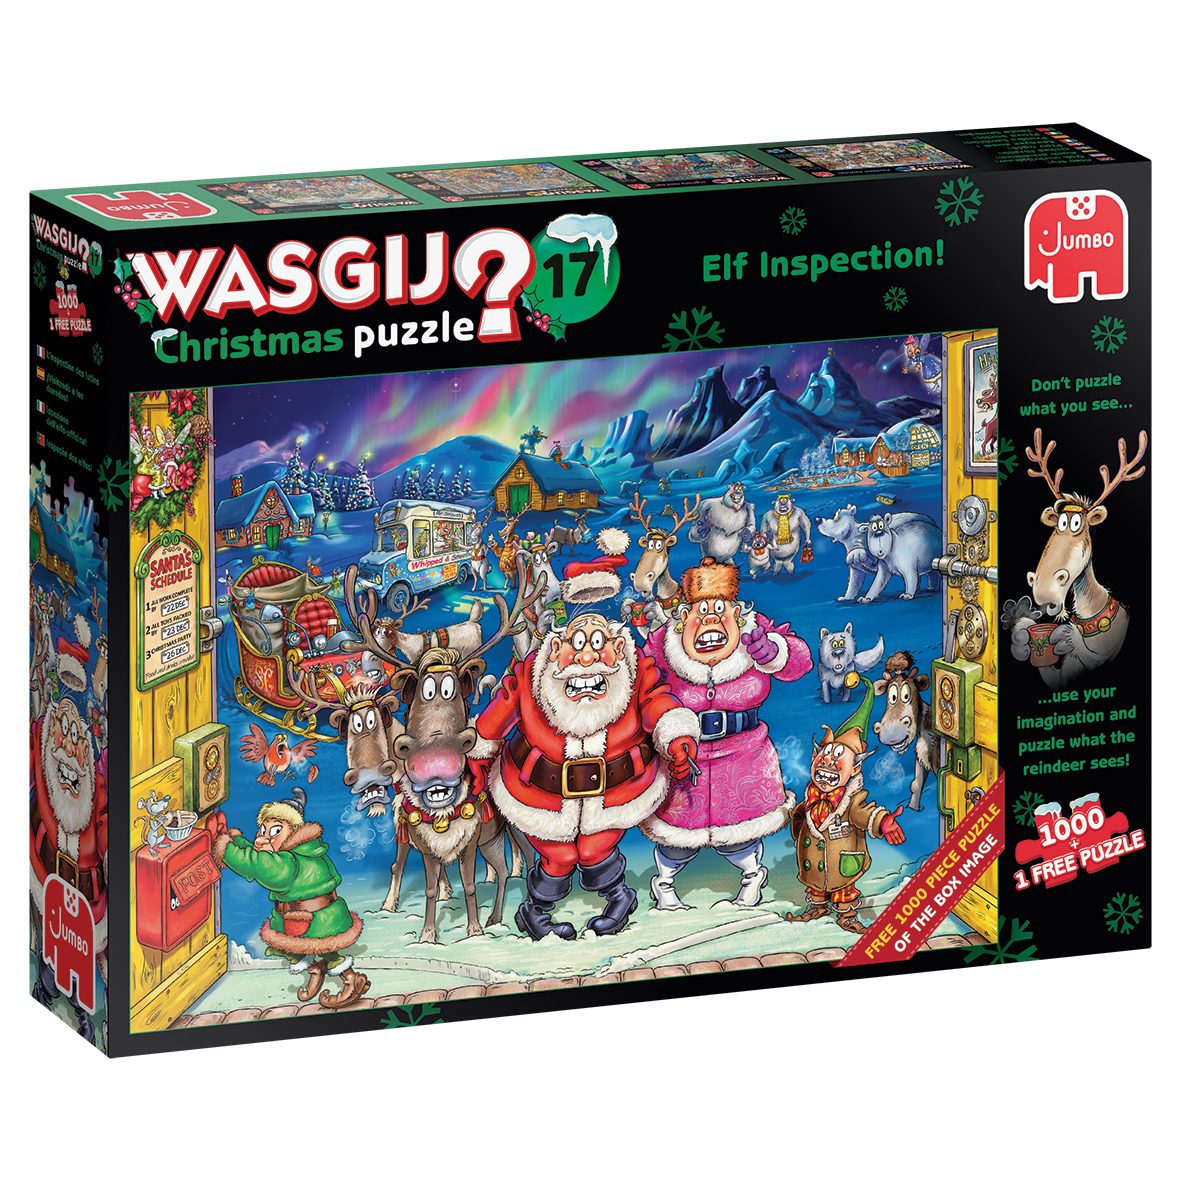 Jumbo Spiele Puzzle 25003 Wasgij Christmas 17 - Elf Inspection!, 1000 Puzzleteile